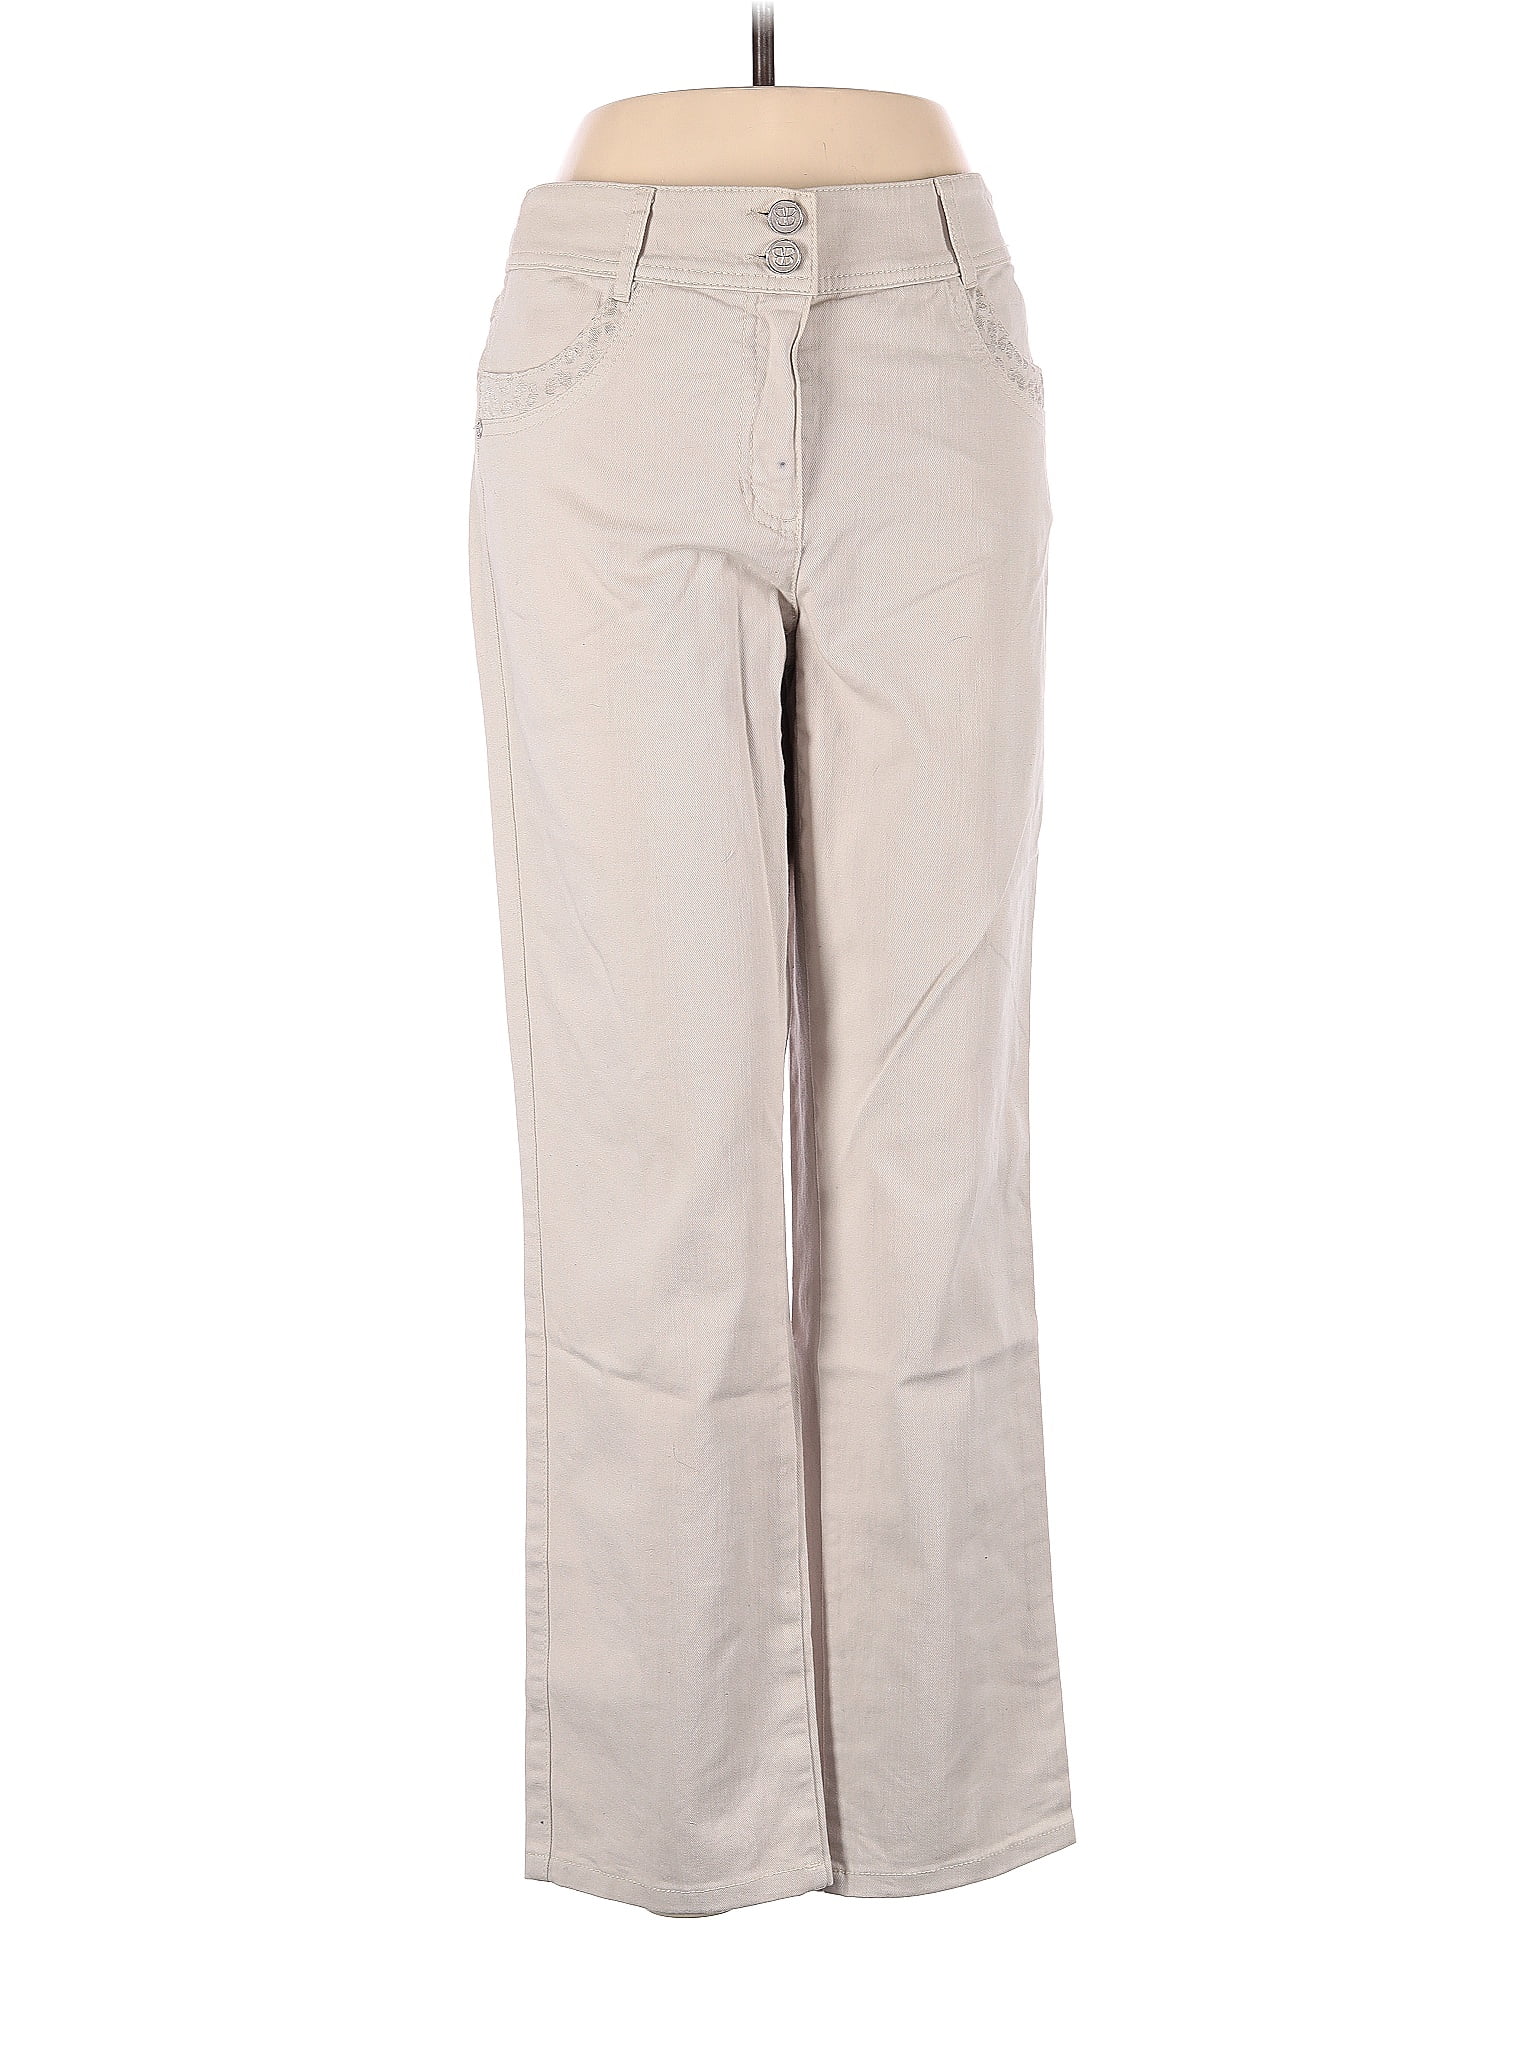 Assorted Brands Grid Tan Casual Pants Size 36 (EU) - 58% off